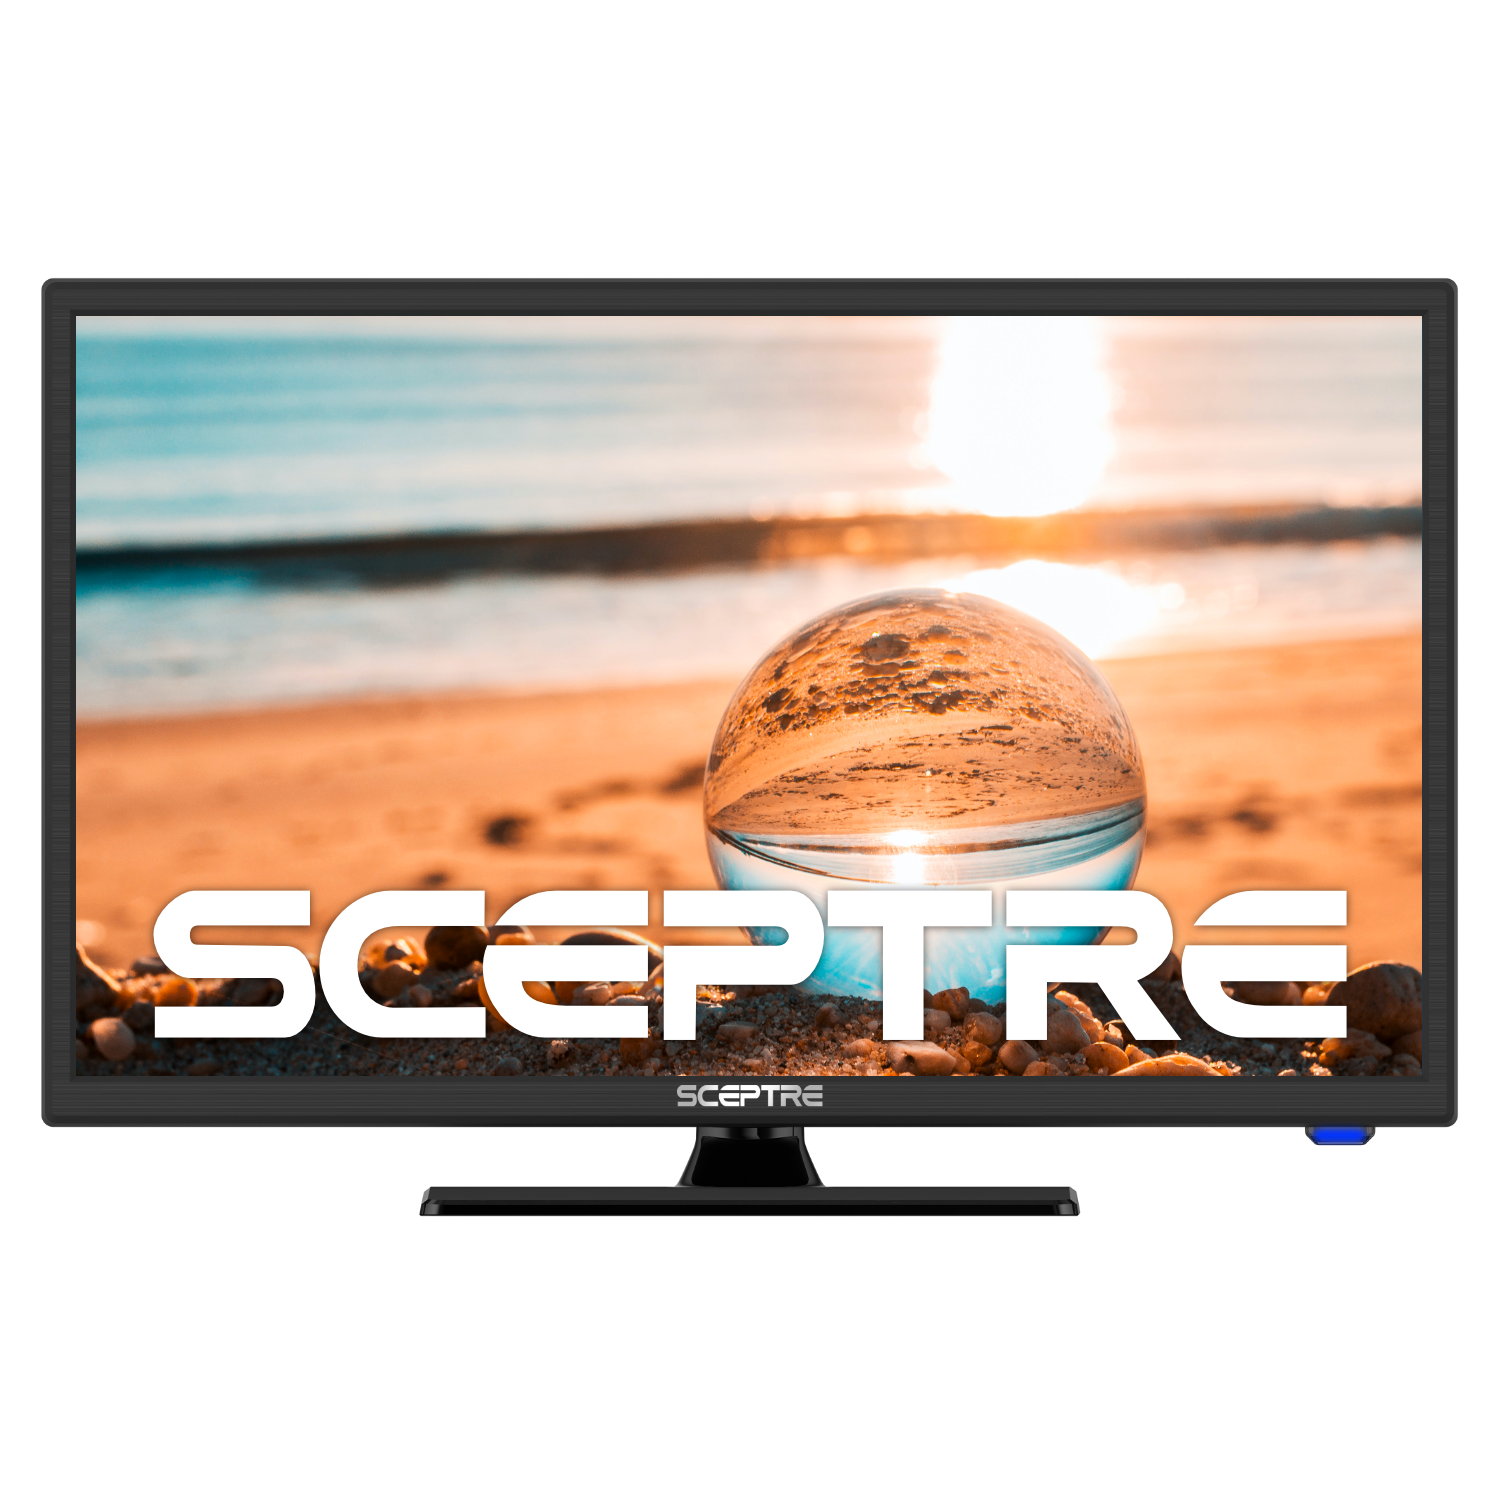 Sceptre 24" Class 1080P FHD LED TV E246BV-F - image 1 of 10